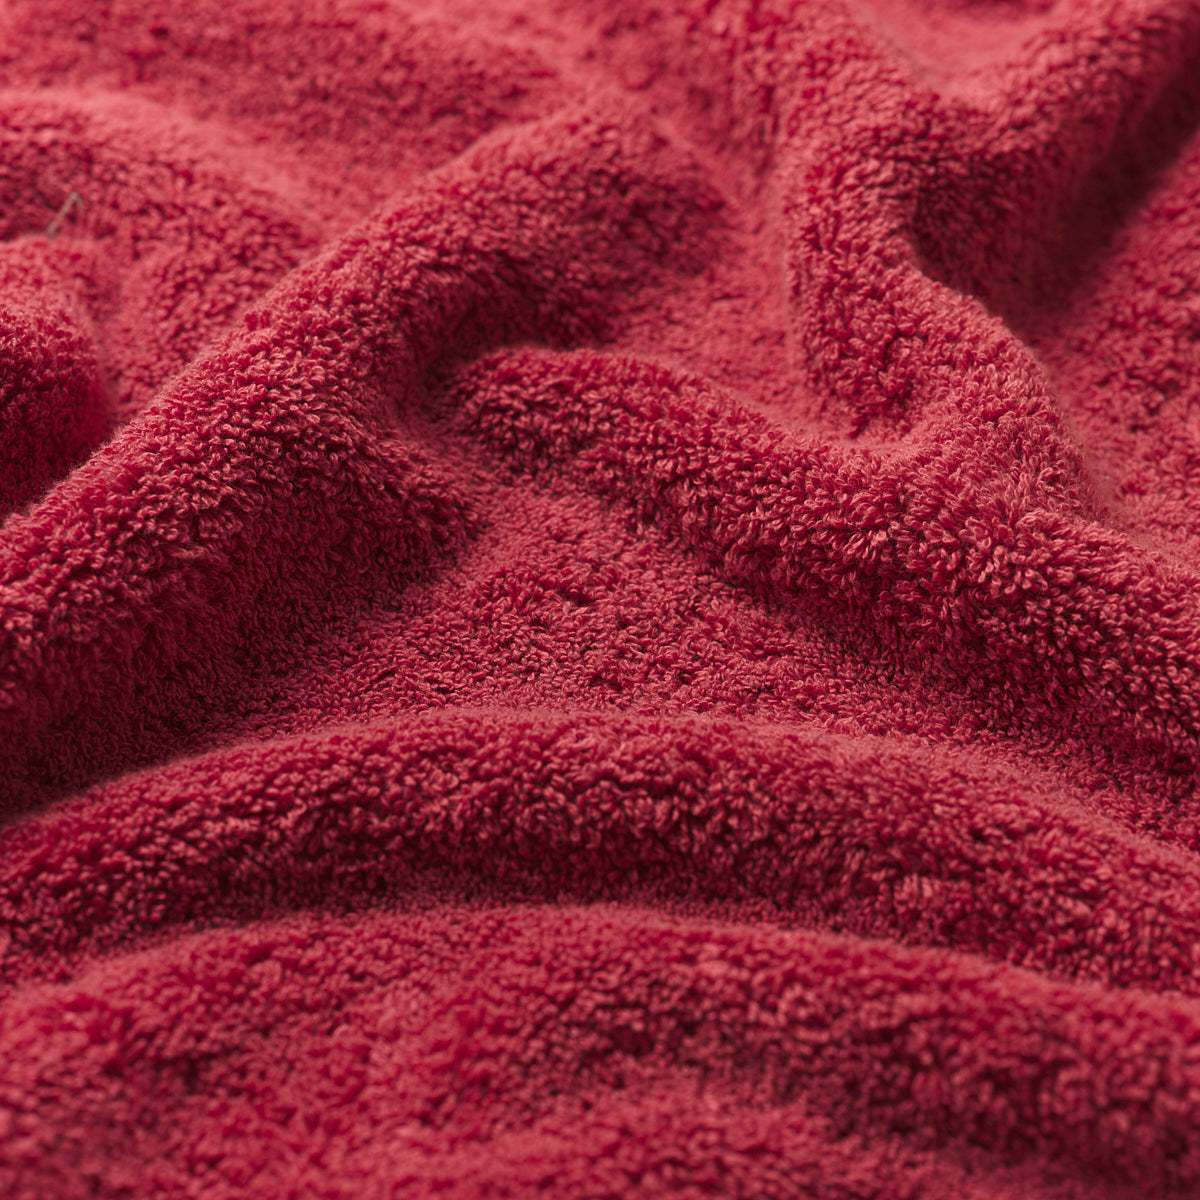 Mineral Red Organic Cotton Bath Sheet Detail